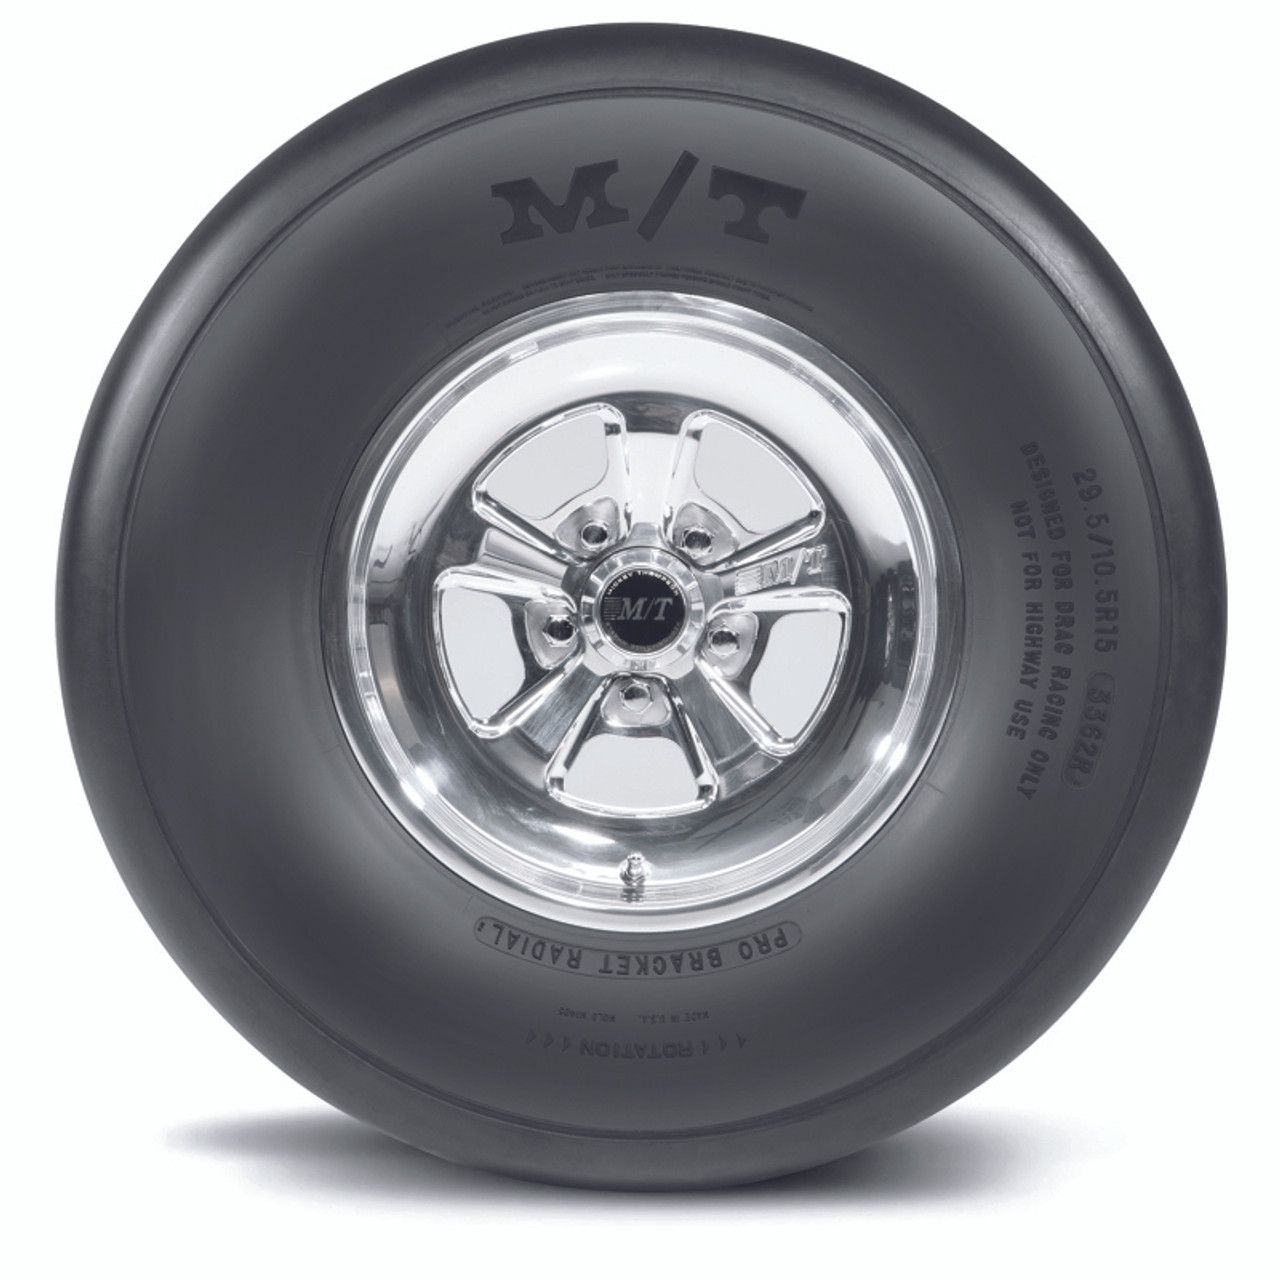 Mickey Thompson Pro Bracket Radial Tire - 29.0/11.5R20 X5 90000059993 - 250800 User 1